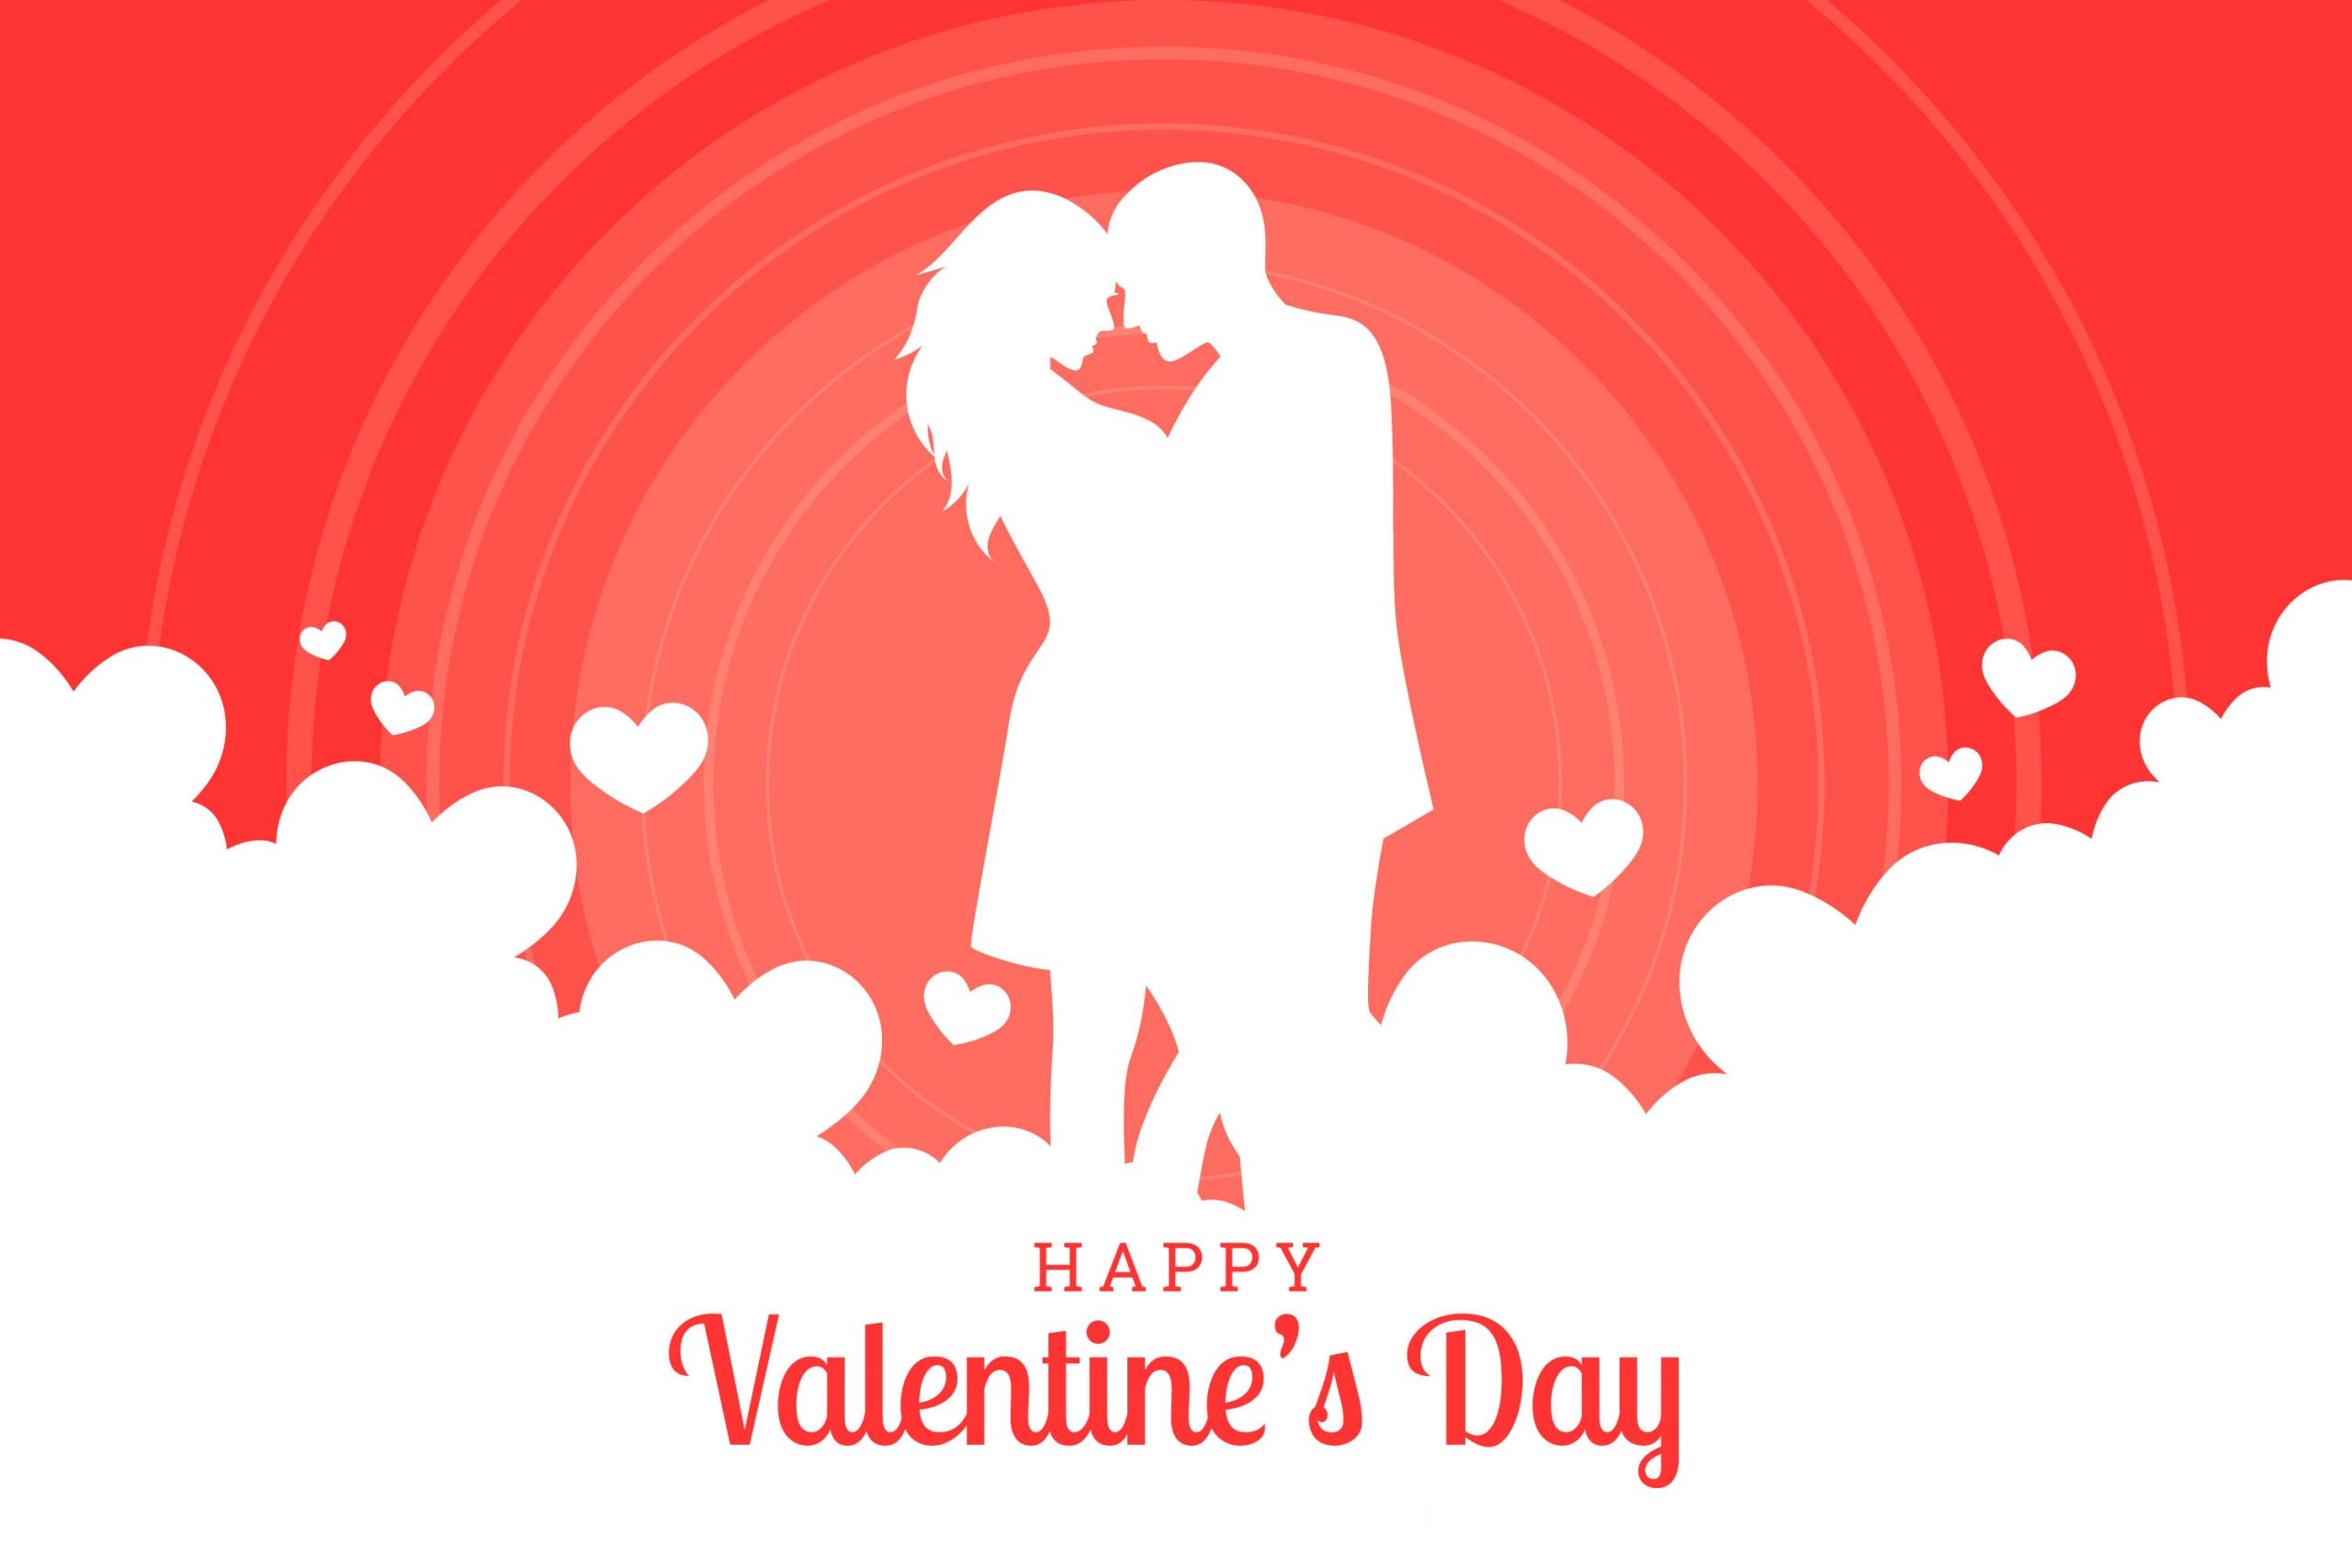 Happy Valentines Day 2022 Image & Photo Free Download